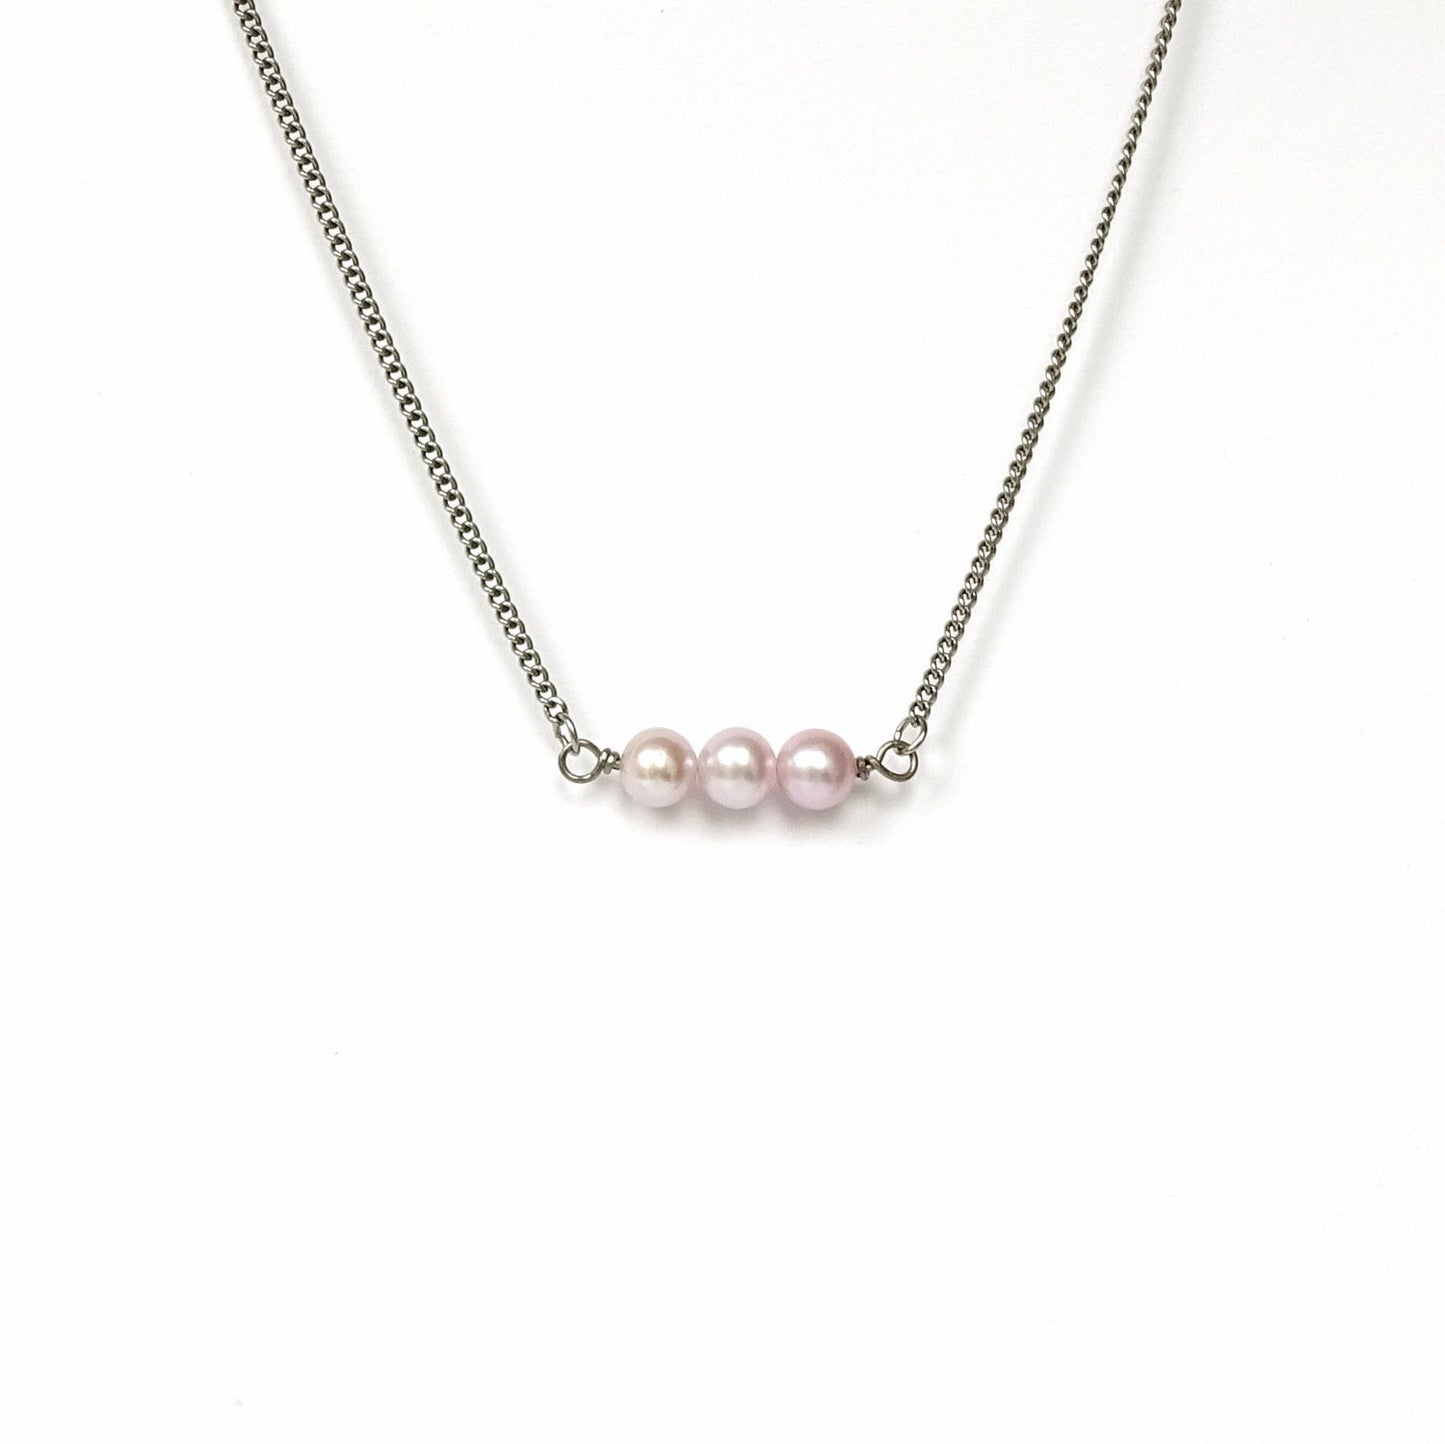 Triple Pink Pearl Titanium Necklace, Lavender Mauve Freshwater Pearl Niobium Necklace, Hypoallergenic Nickel Free Sensitive Skin Jewelry